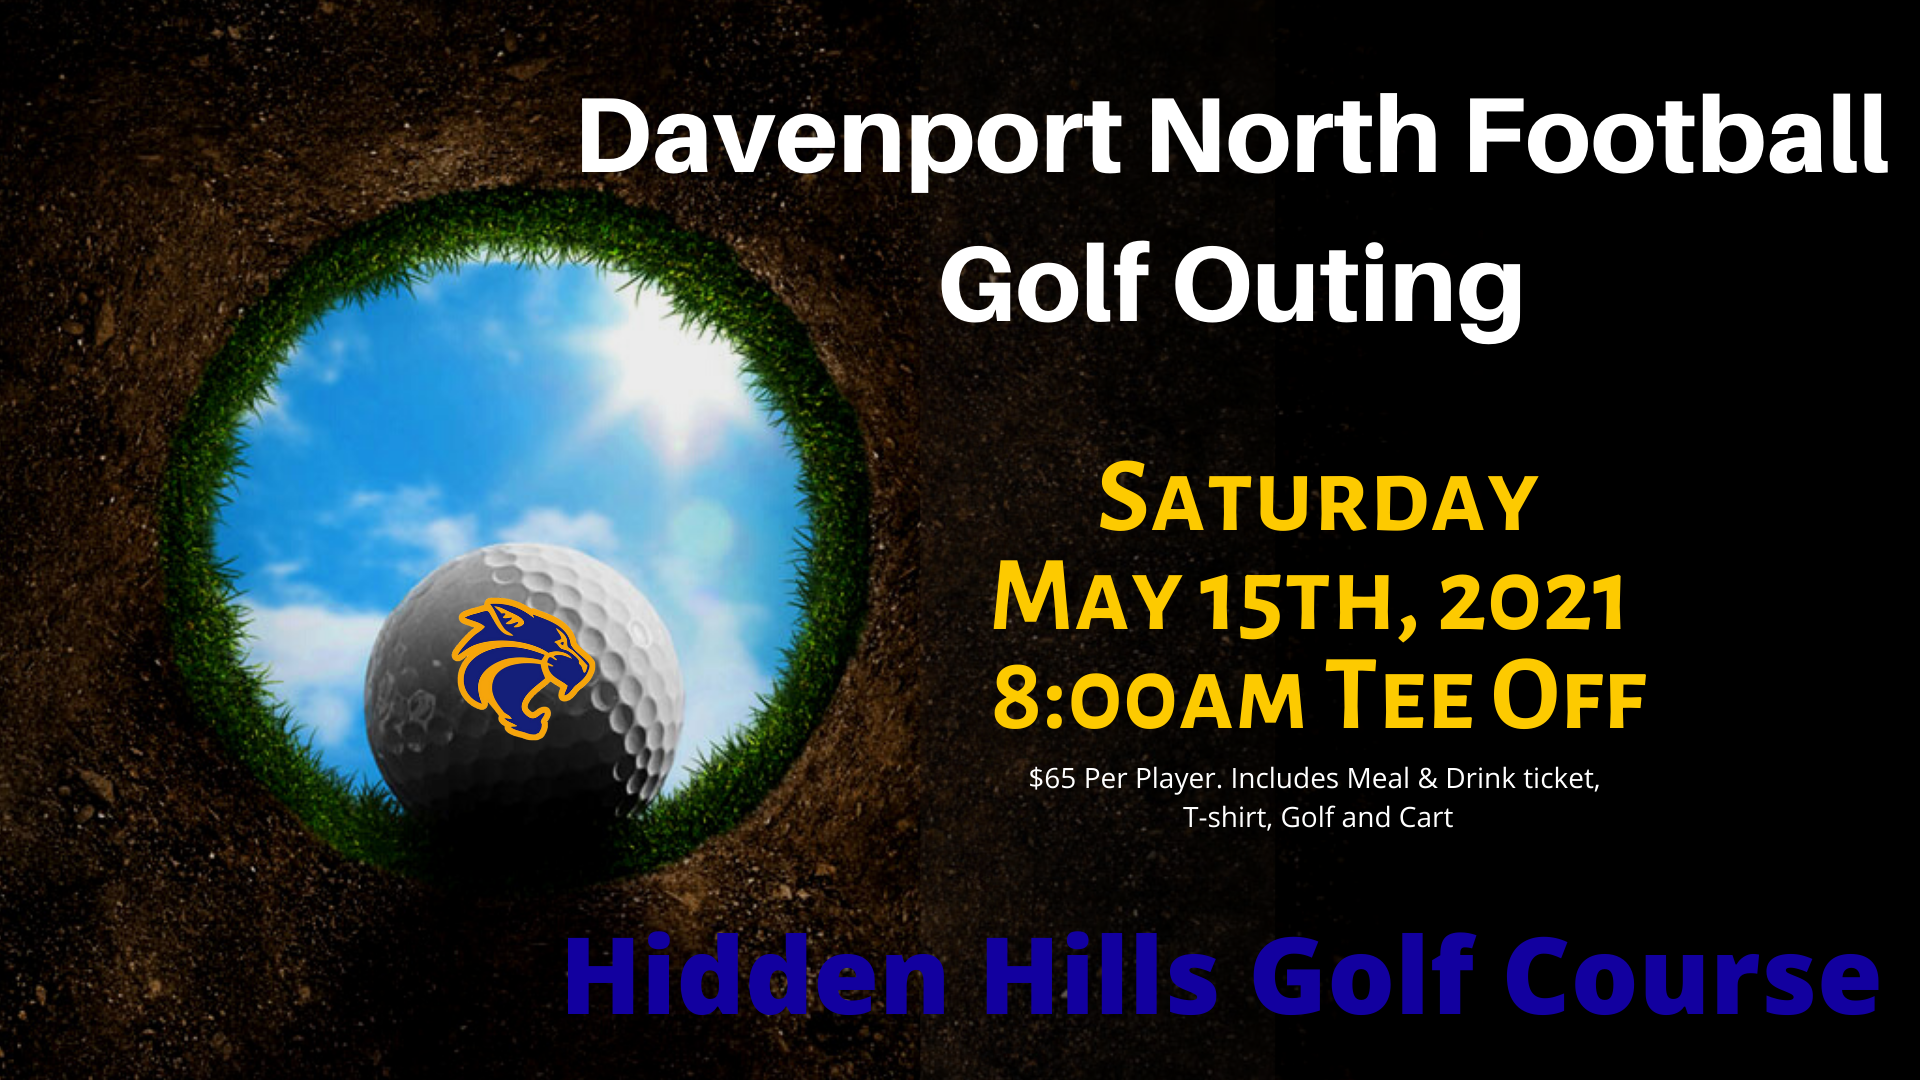 2021 Davenport North Football Golf Outing